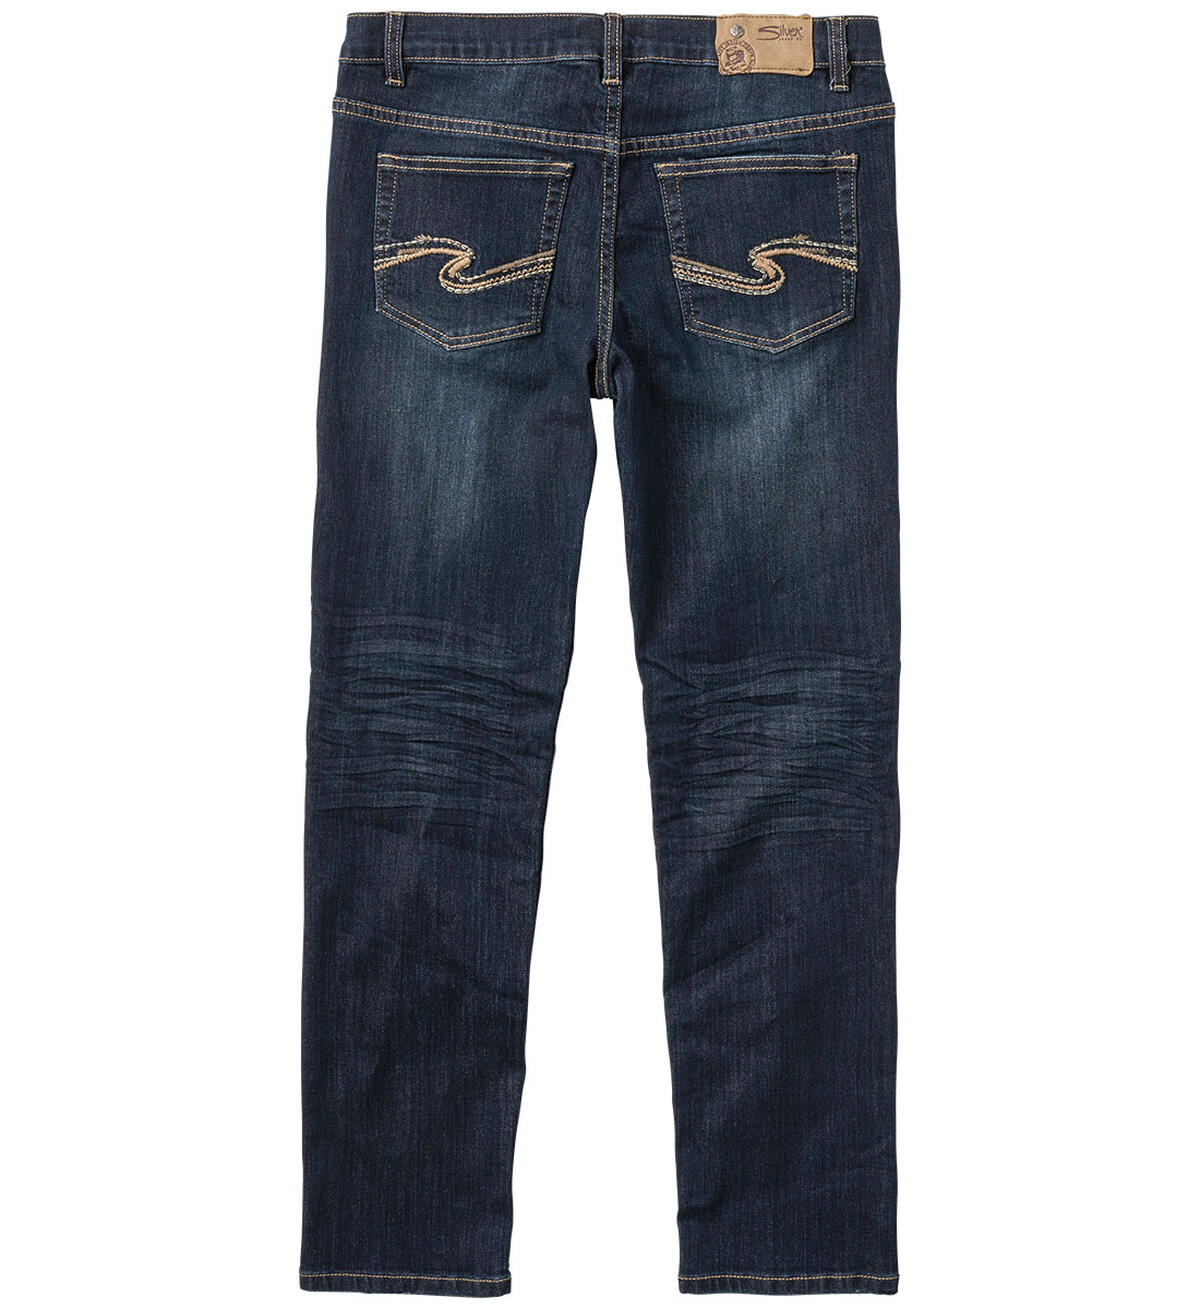 Nathan Skinny Jeans in Dark Wash (4-7), , hi-res image number 1